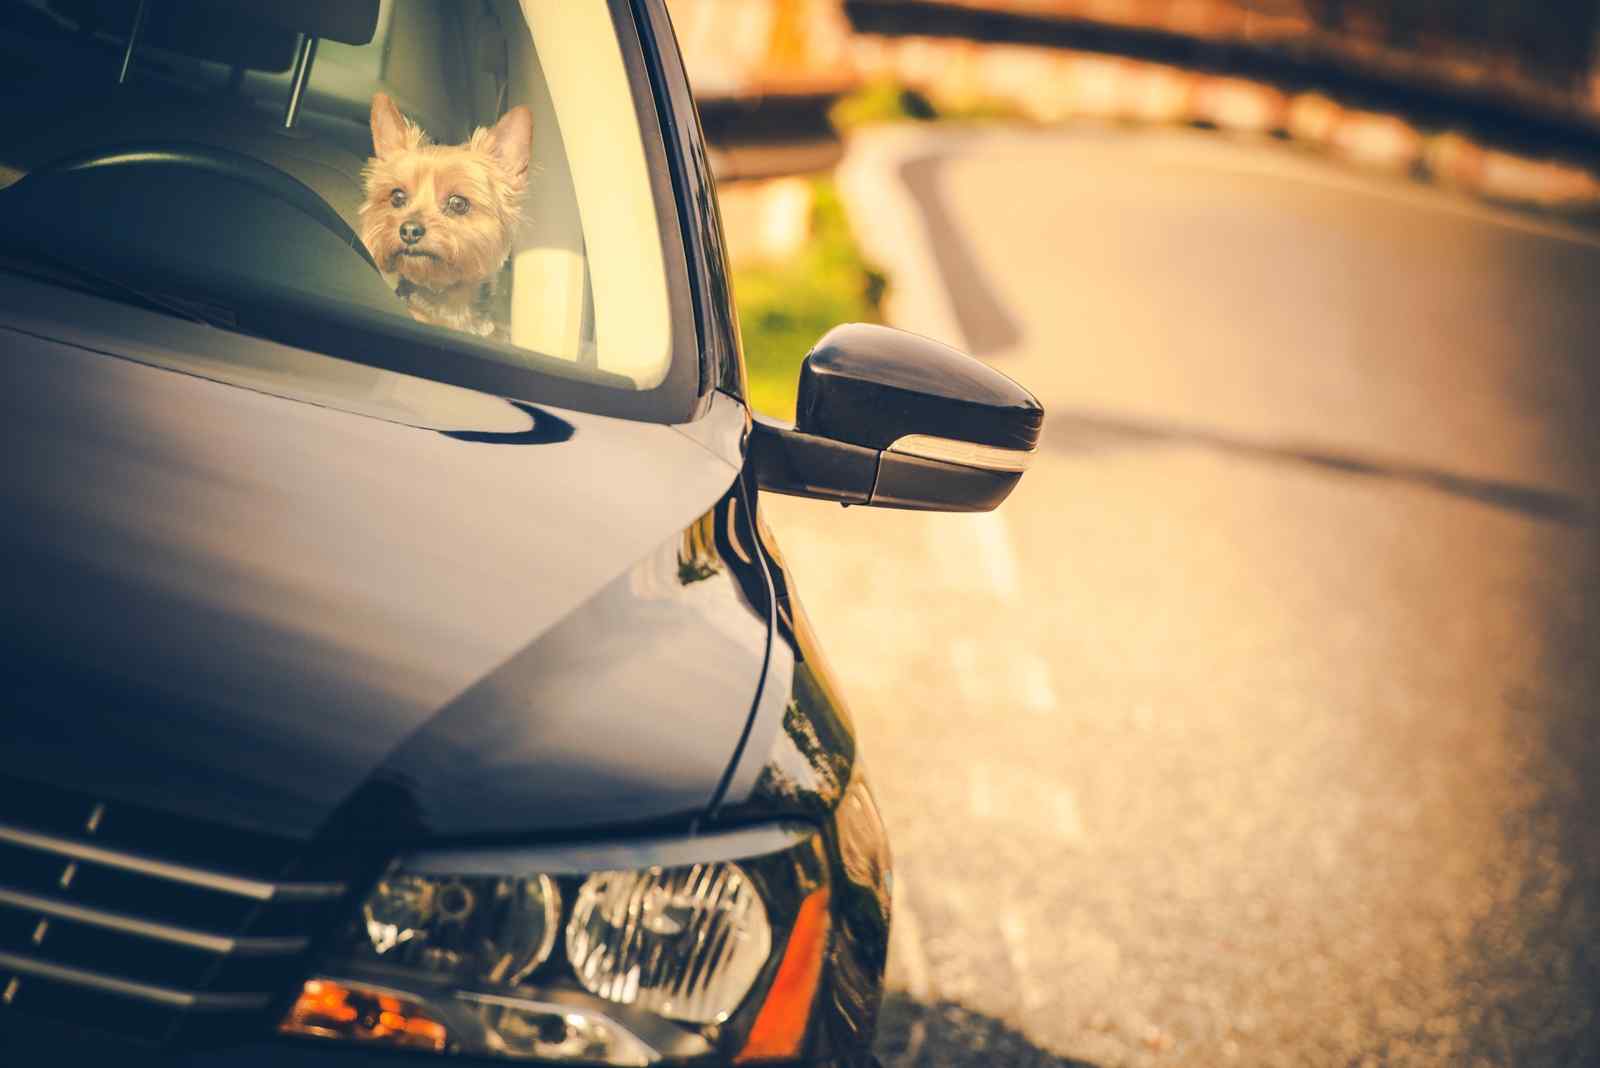 Dog left alone inside the car